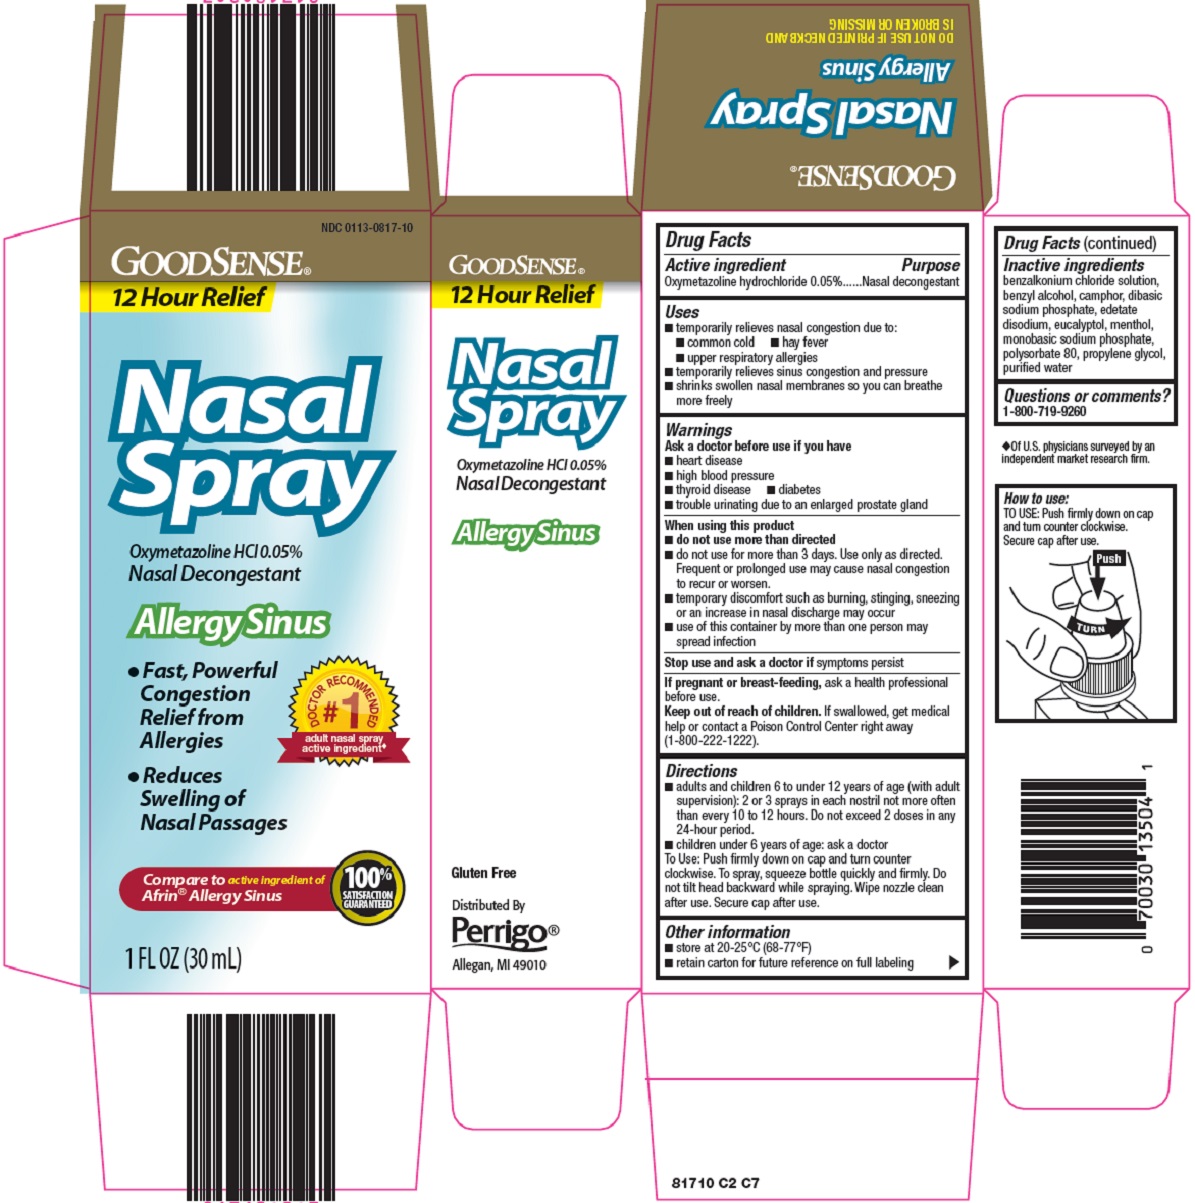 nasal-spray-image